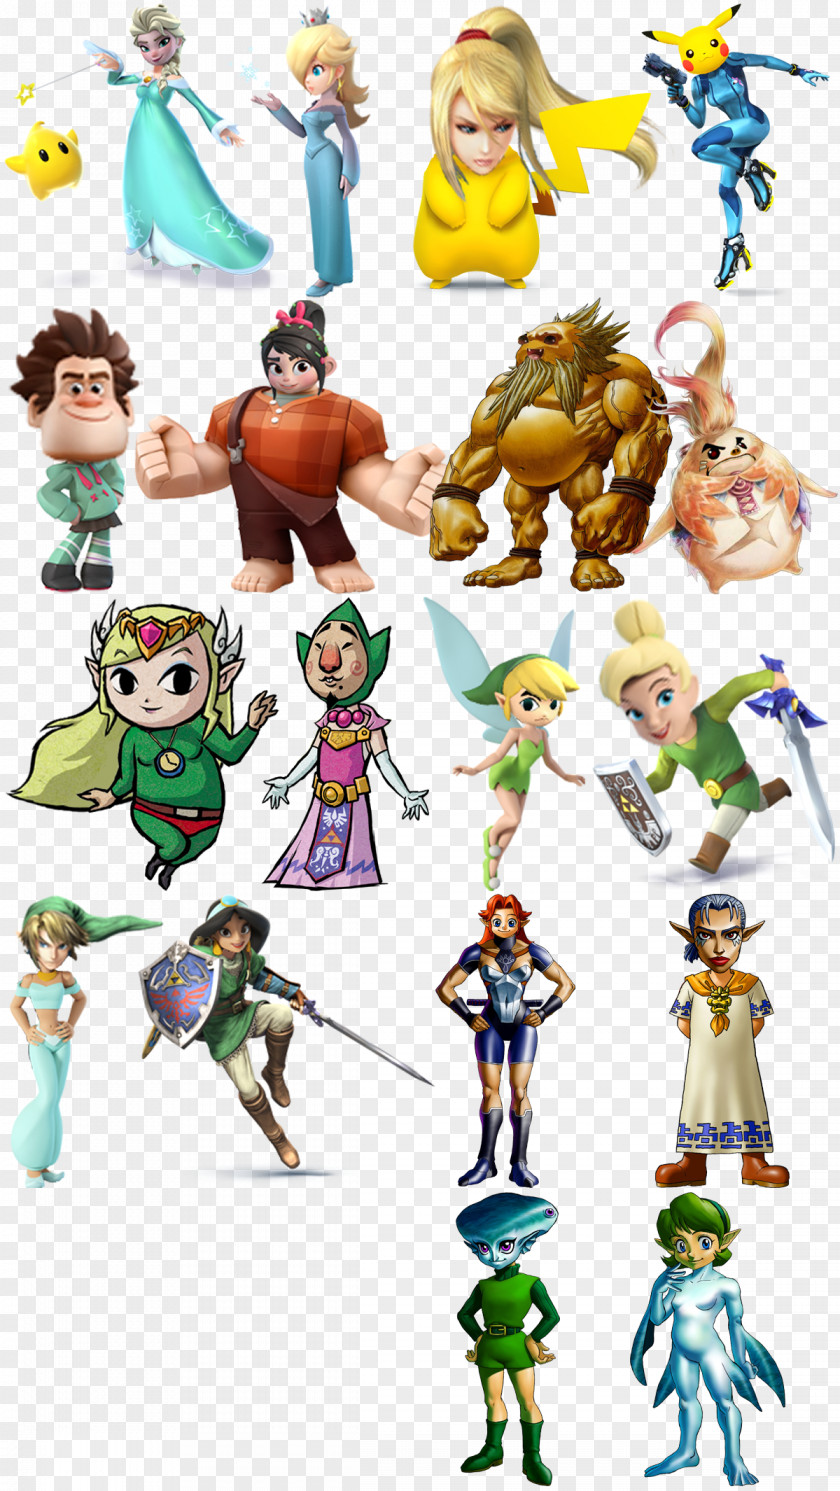 Wreck It Ralph Link Super Smash Bros. For Nintendo 3DS And Wii U Samus Aran Princess Peach Rosalina PNG